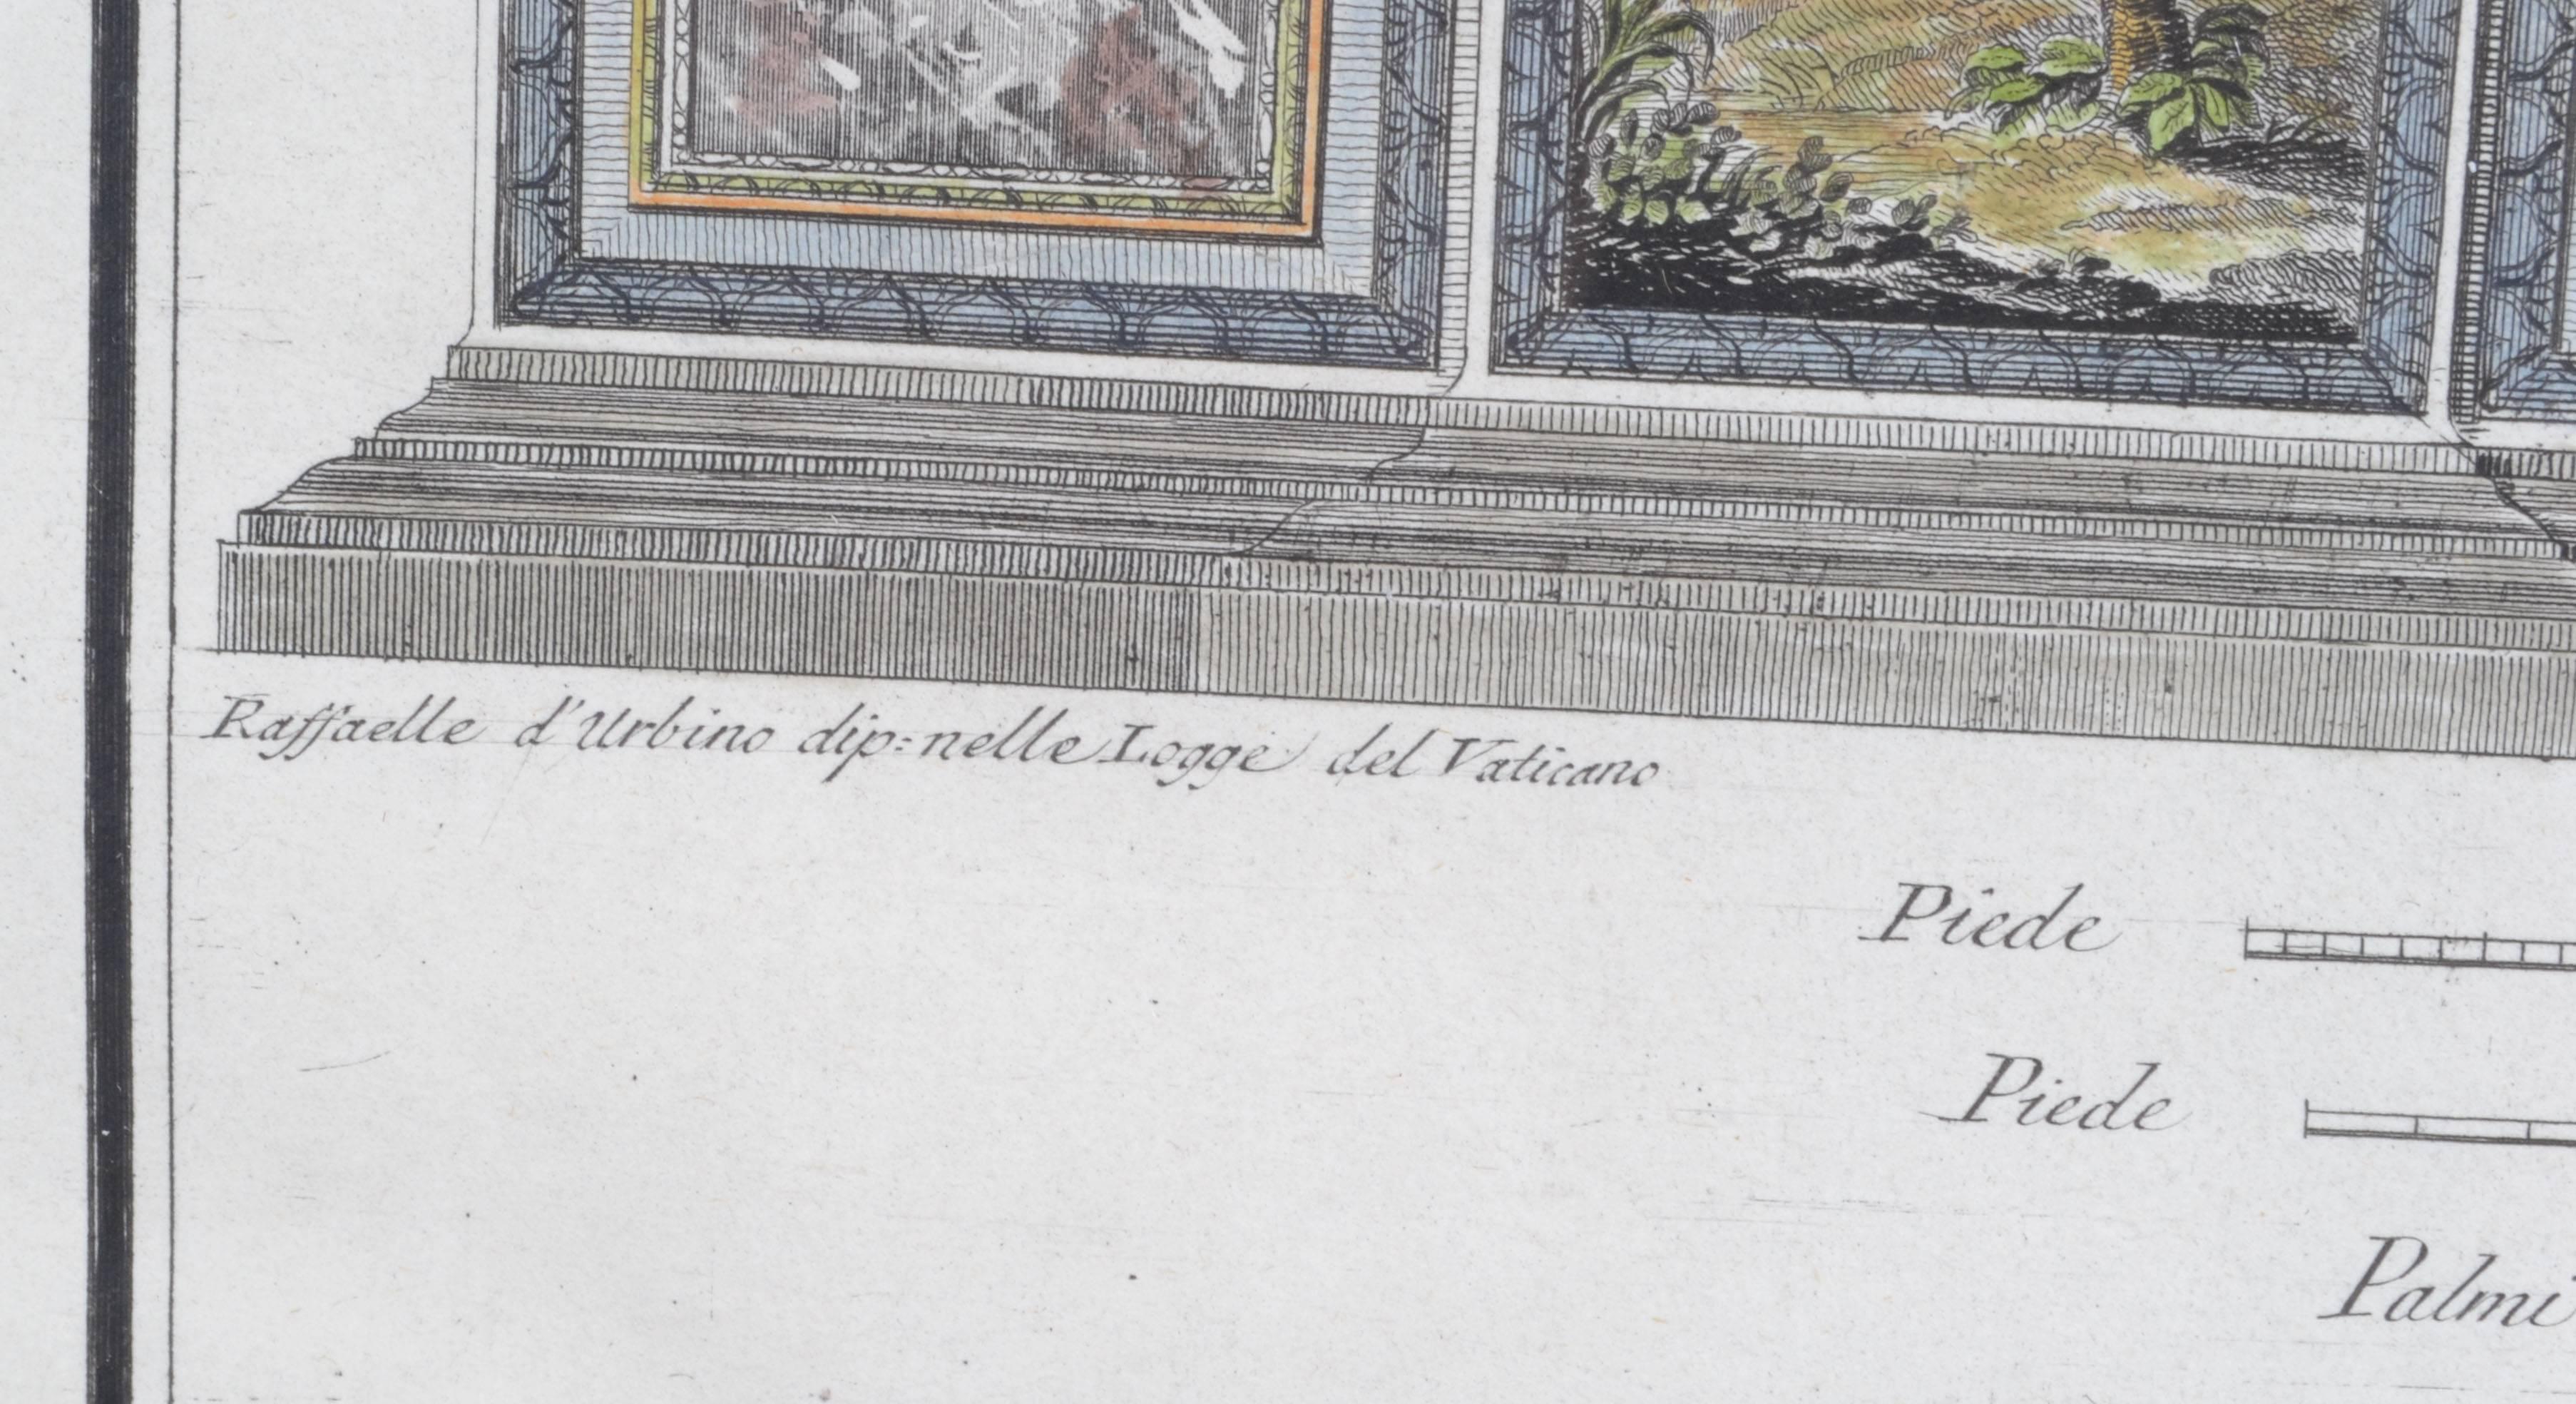 Fin du XVIIIe siècle Gravure de Carlo Lasinio de la Loggia Del Vaticano par Raffaello D'urbino. Ensemble 4 pièces en vente